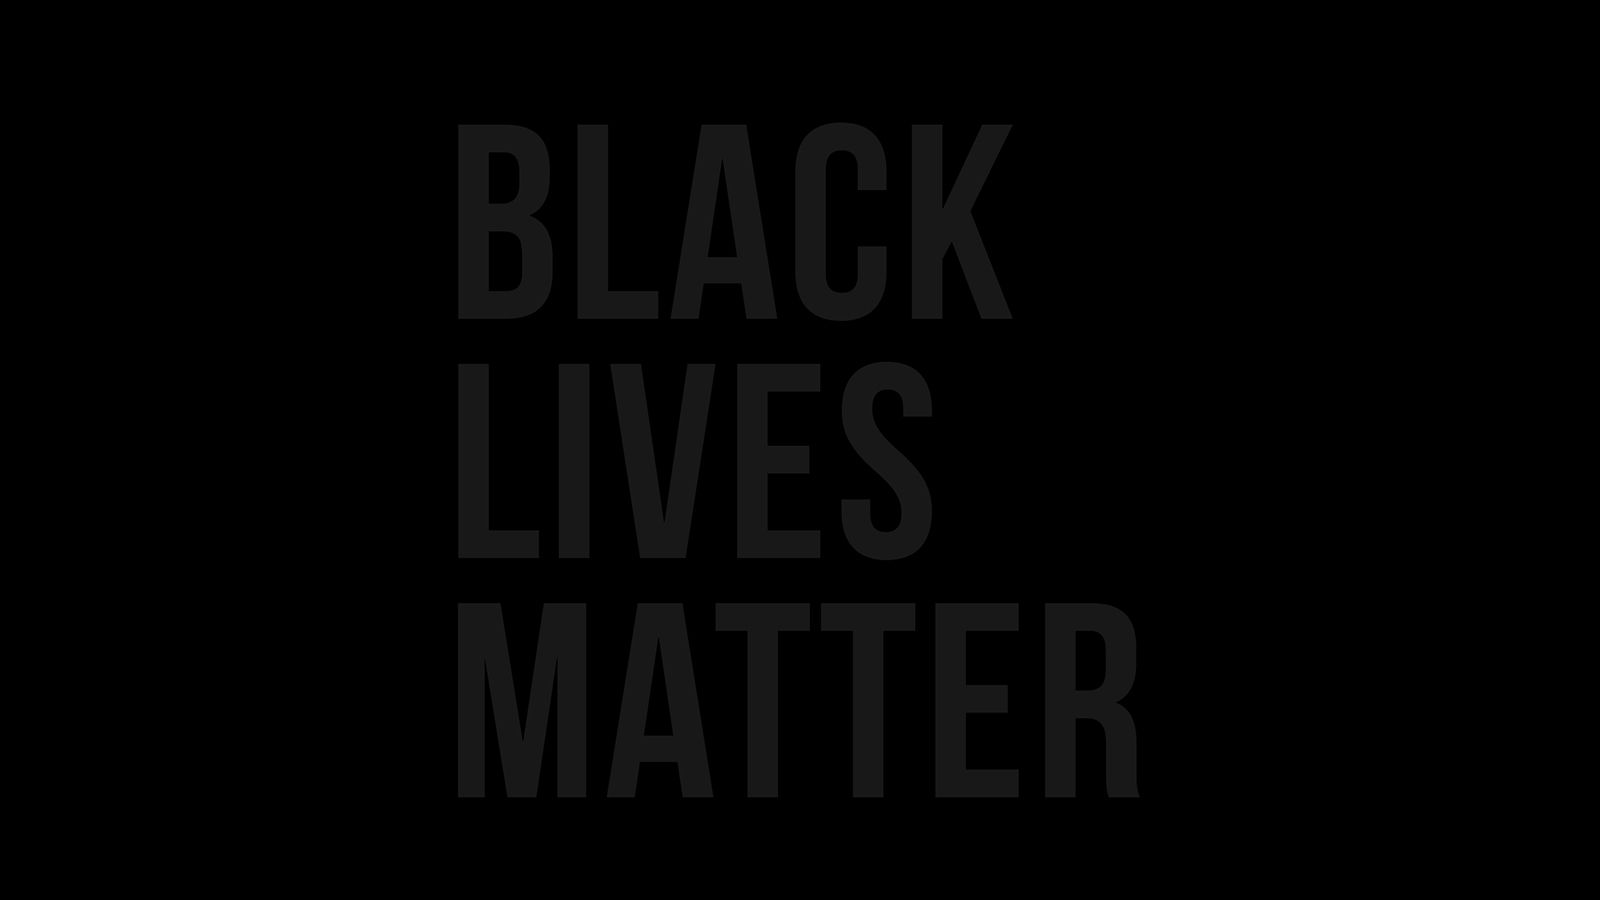  Black  Lives  Matter  HD Wallpapers  Wallpaper  Cave